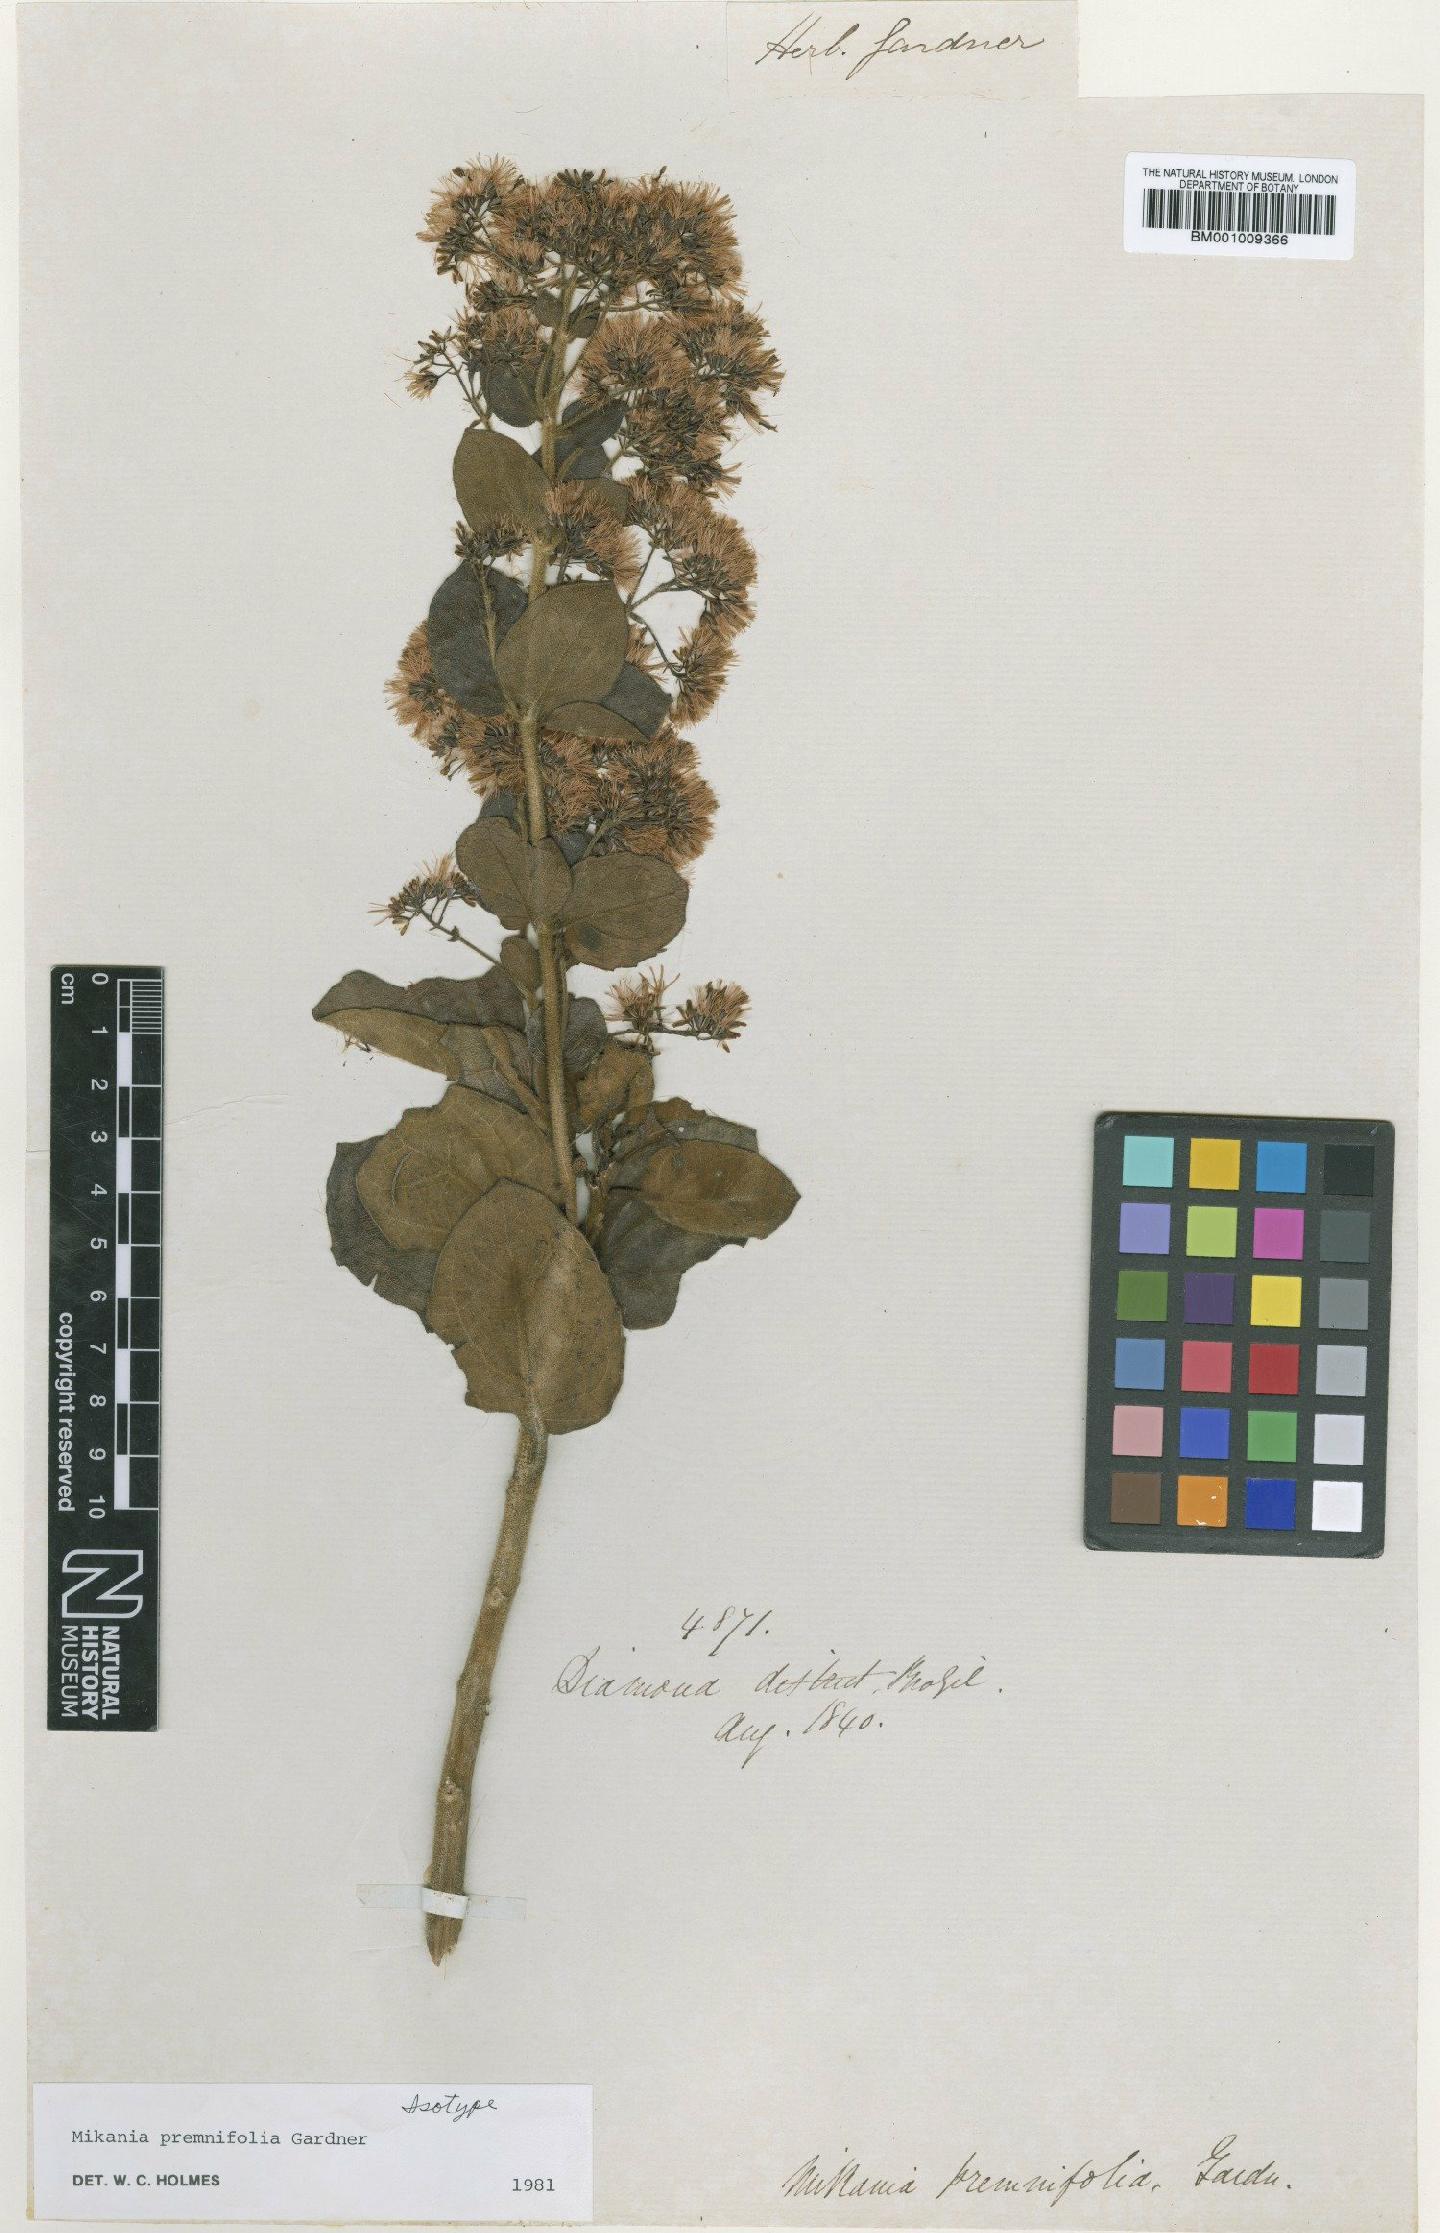 To NHMUK collection (Mikania premnifolia Gardner; Isotype; NHMUK:ecatalogue:608280)